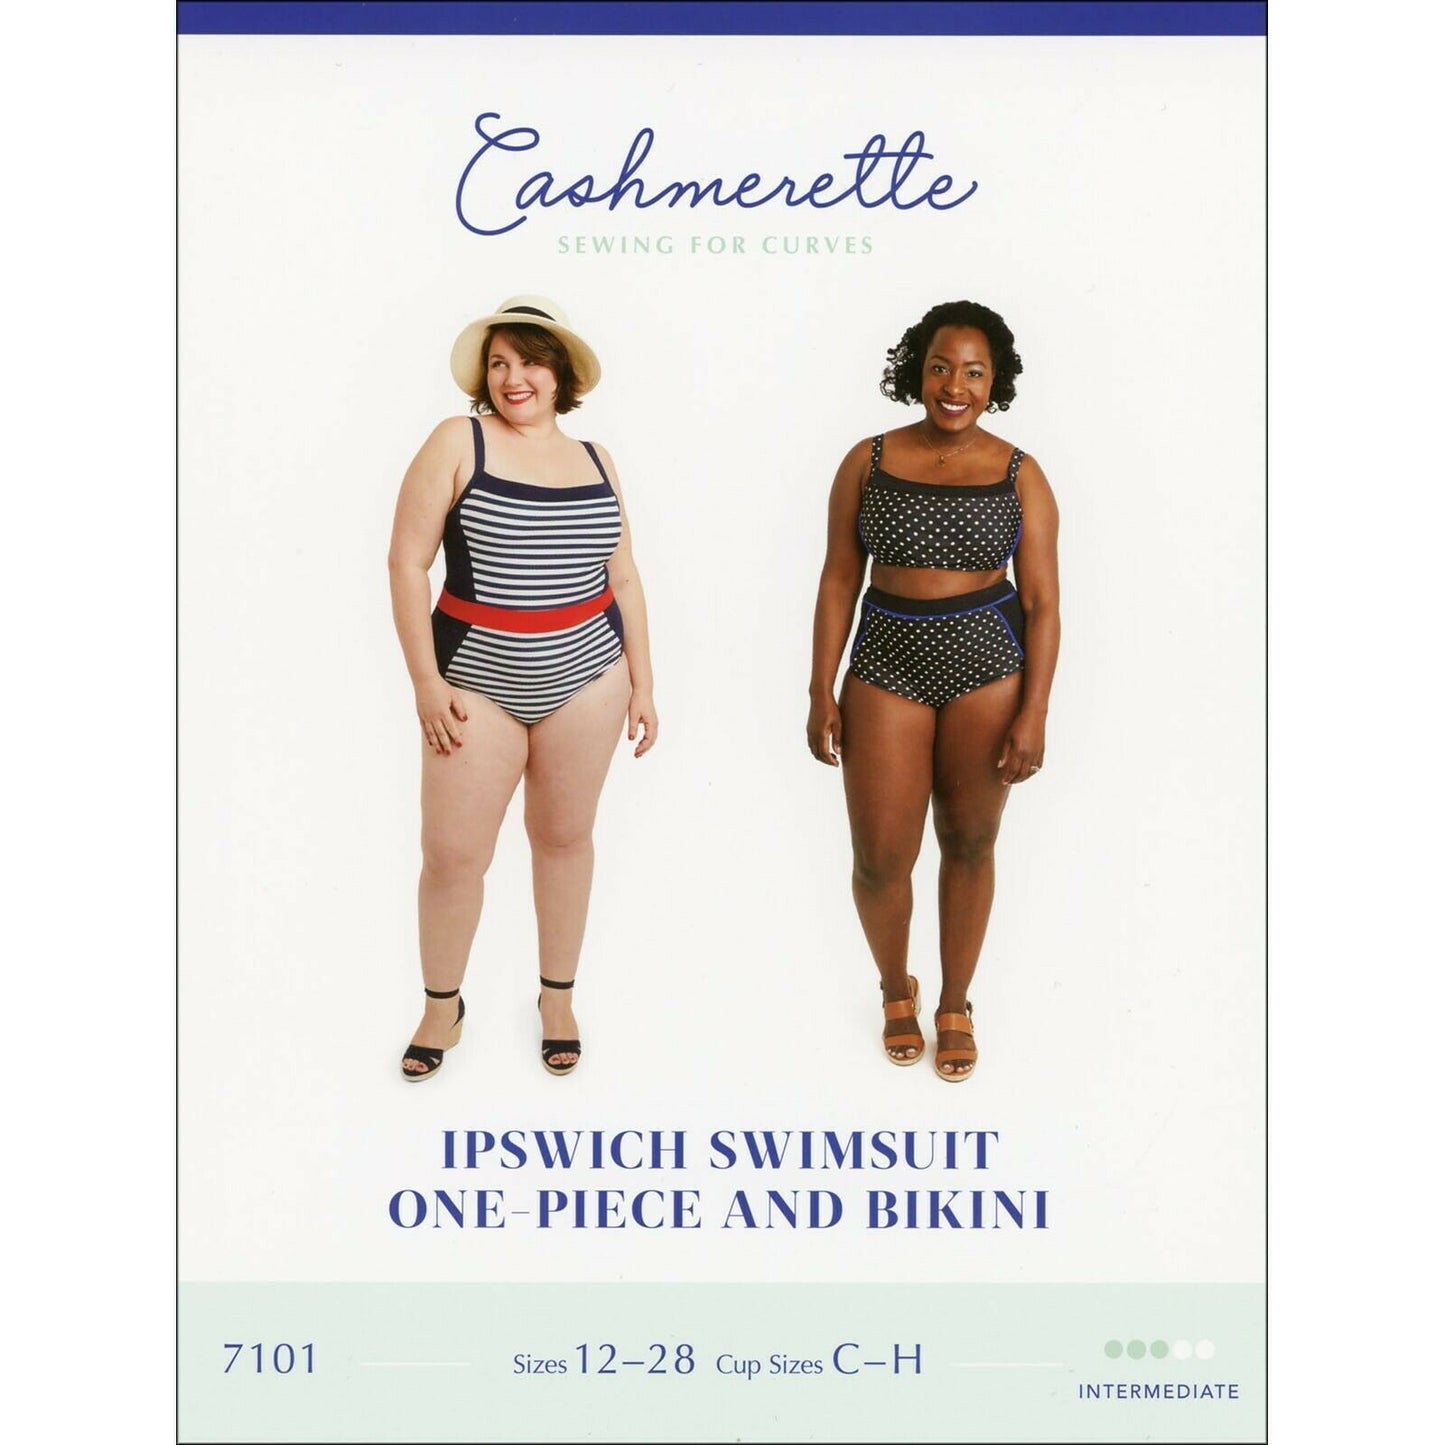 Ipswich Swimsuit - By Cashmerette